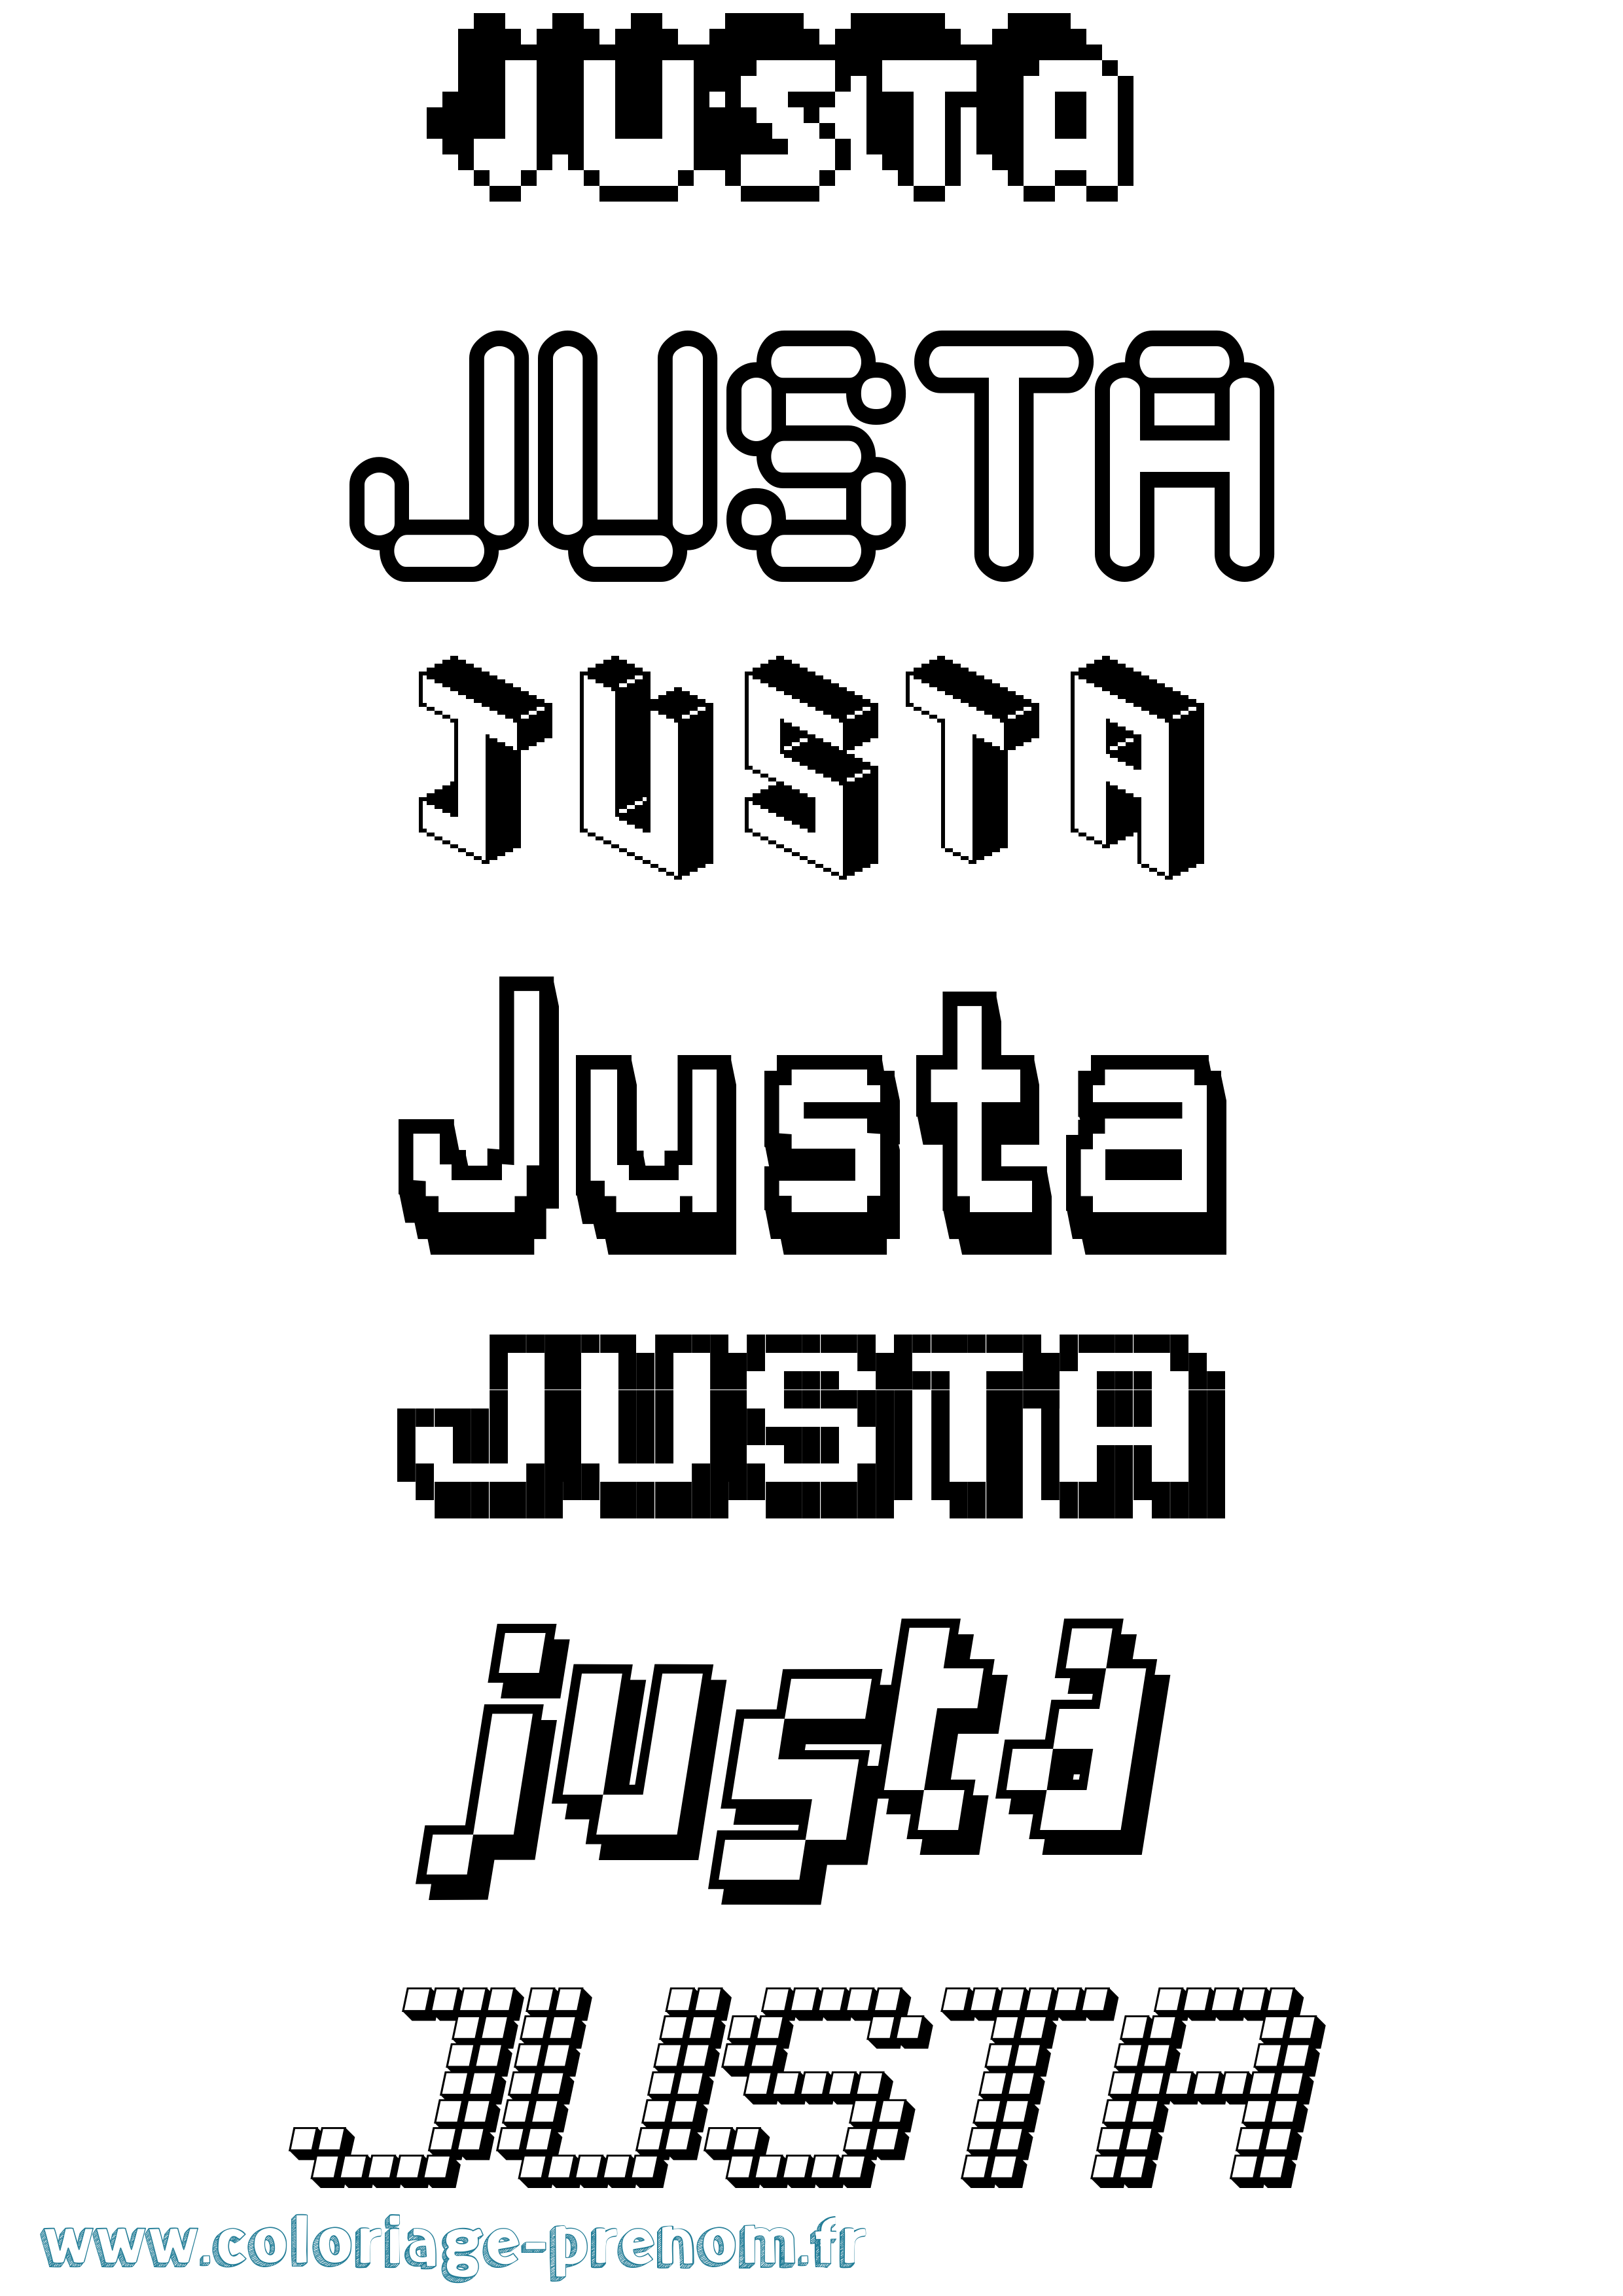 Coloriage prénom Justa Pixel